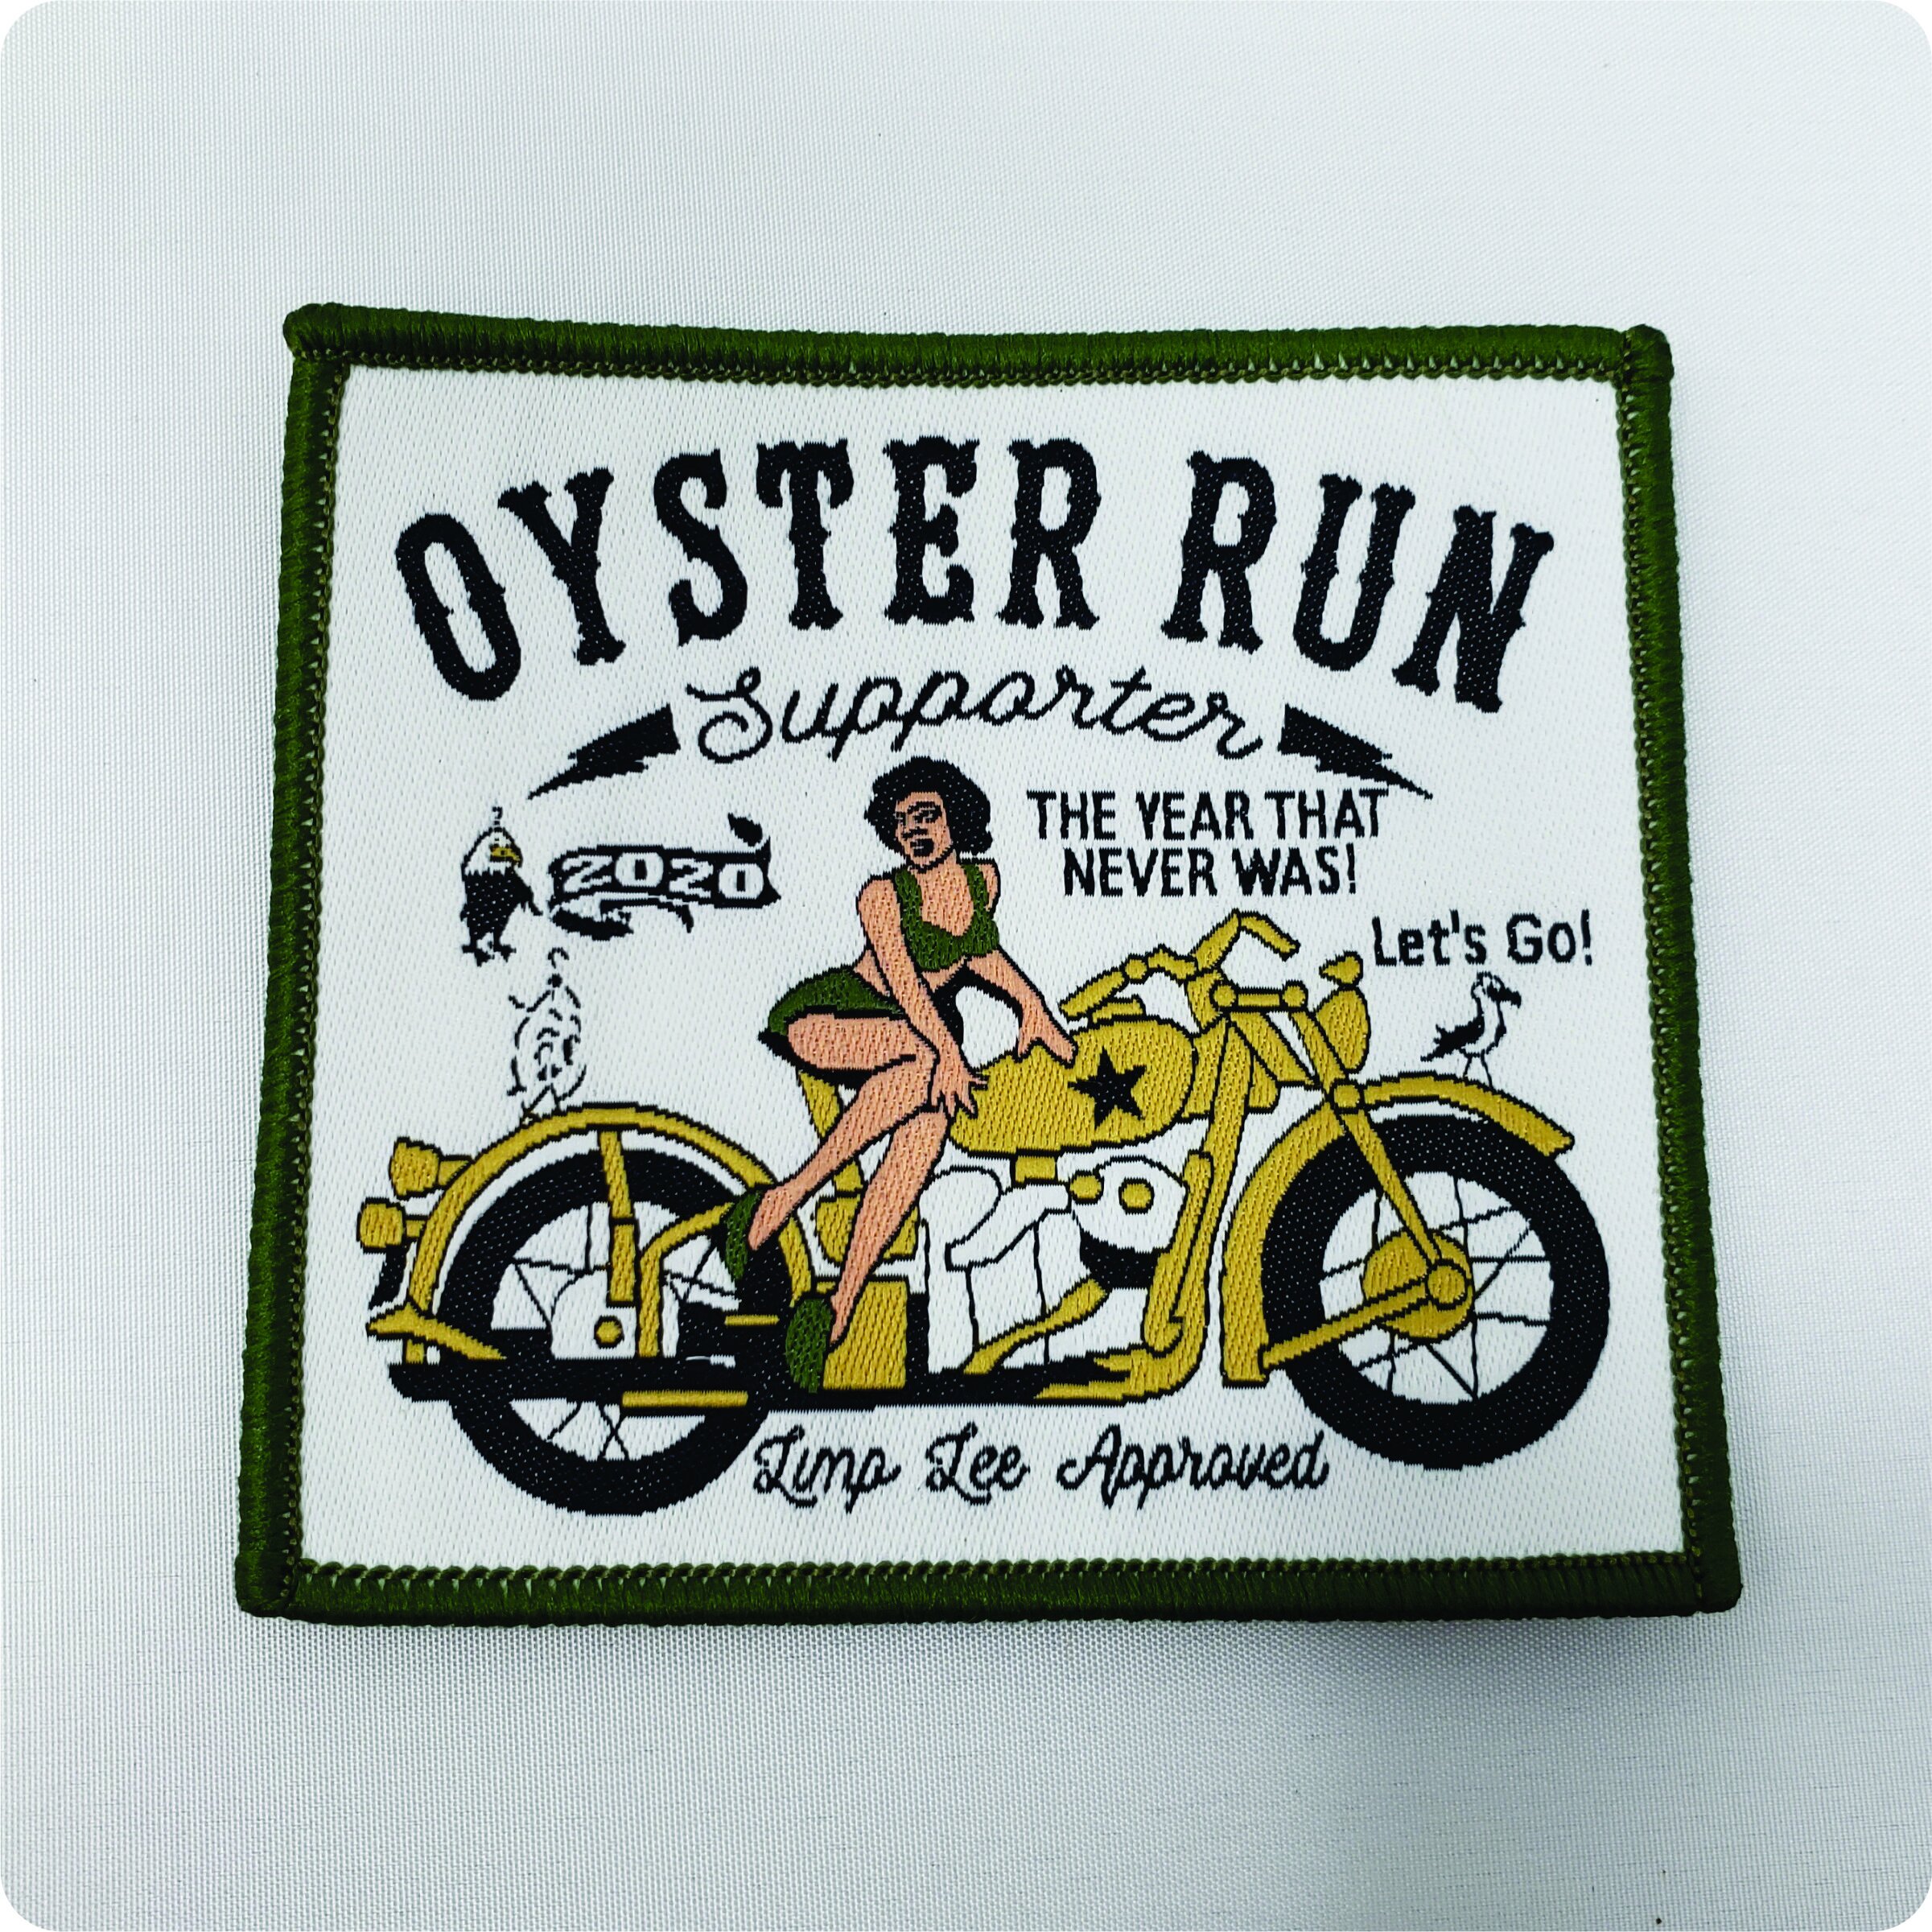 2020 Oyster Run Patch.jpg